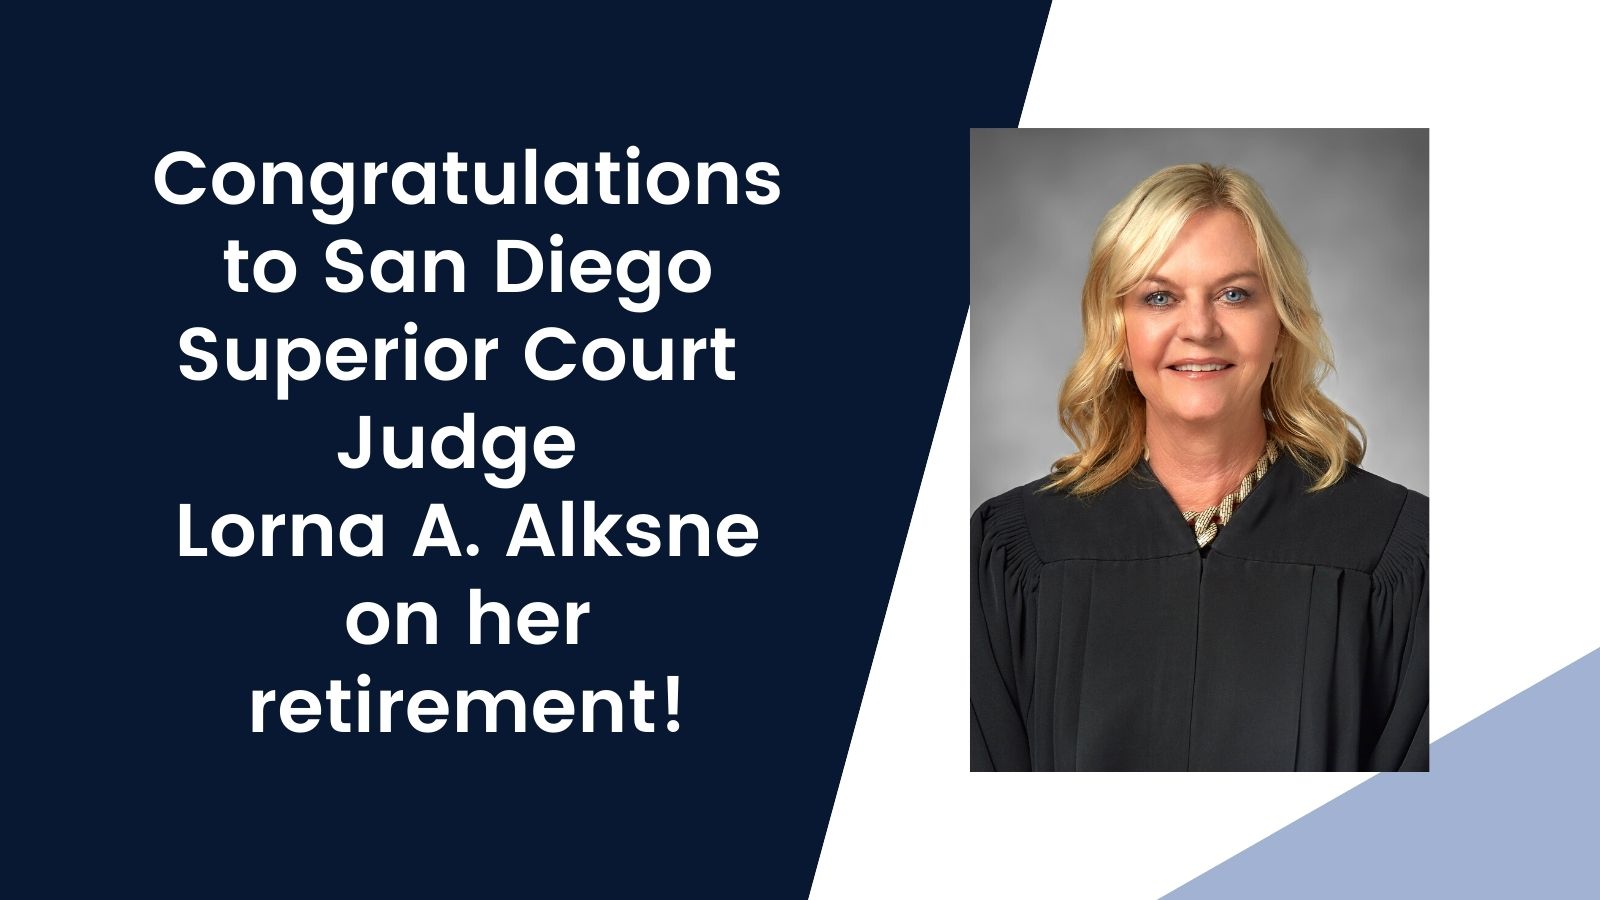 Retirement of Judge Lorna A. Alksne